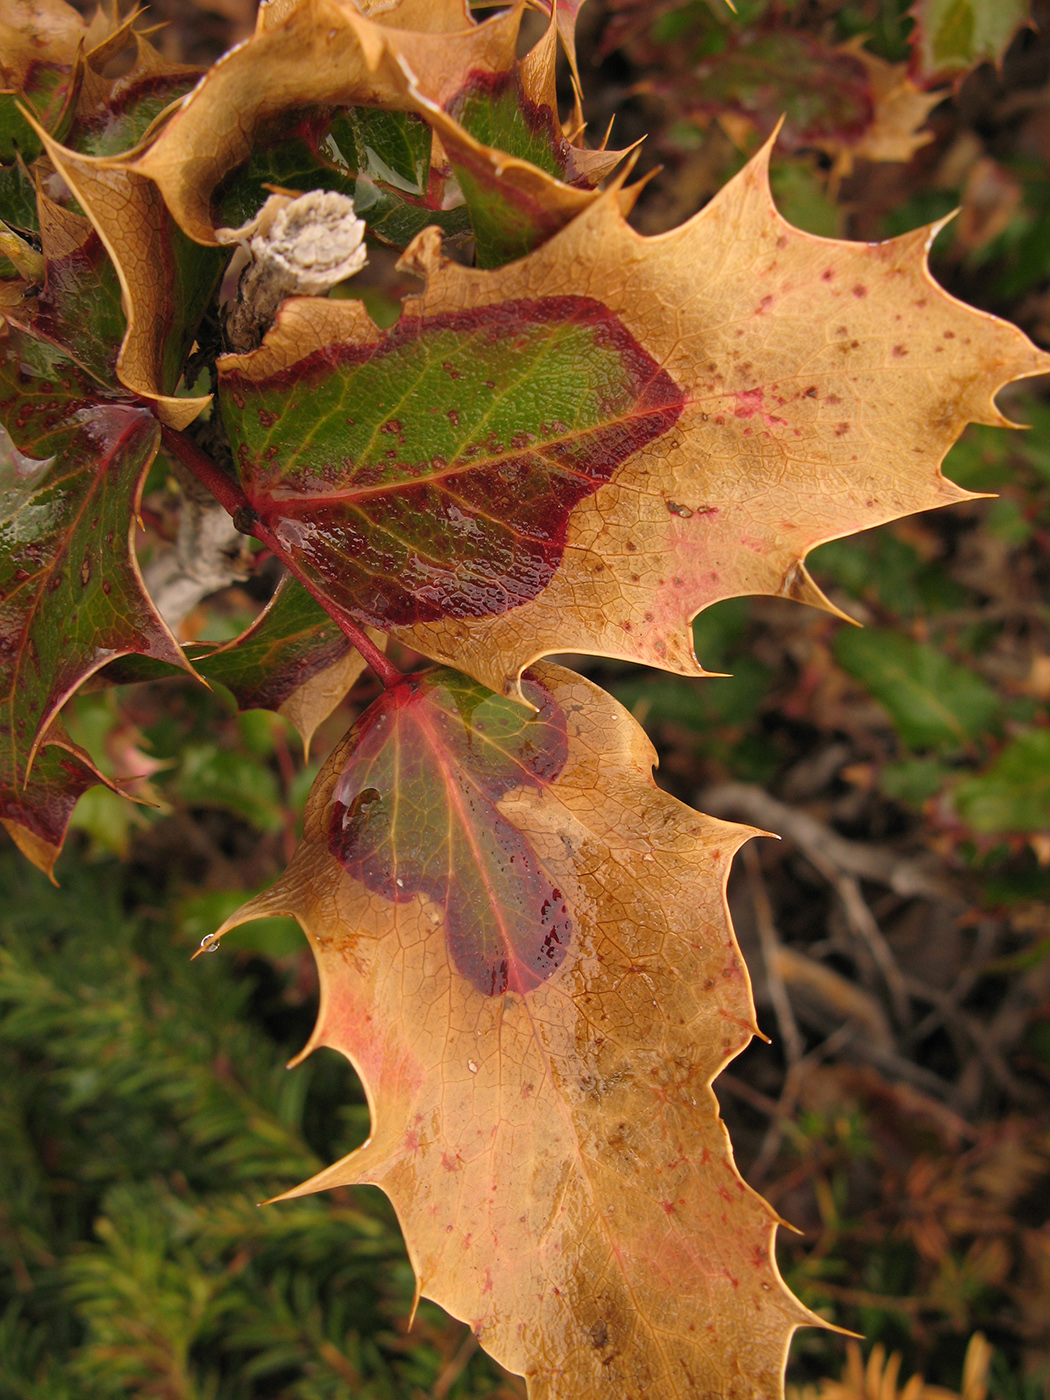 Winter injury on mahonia leaves. 